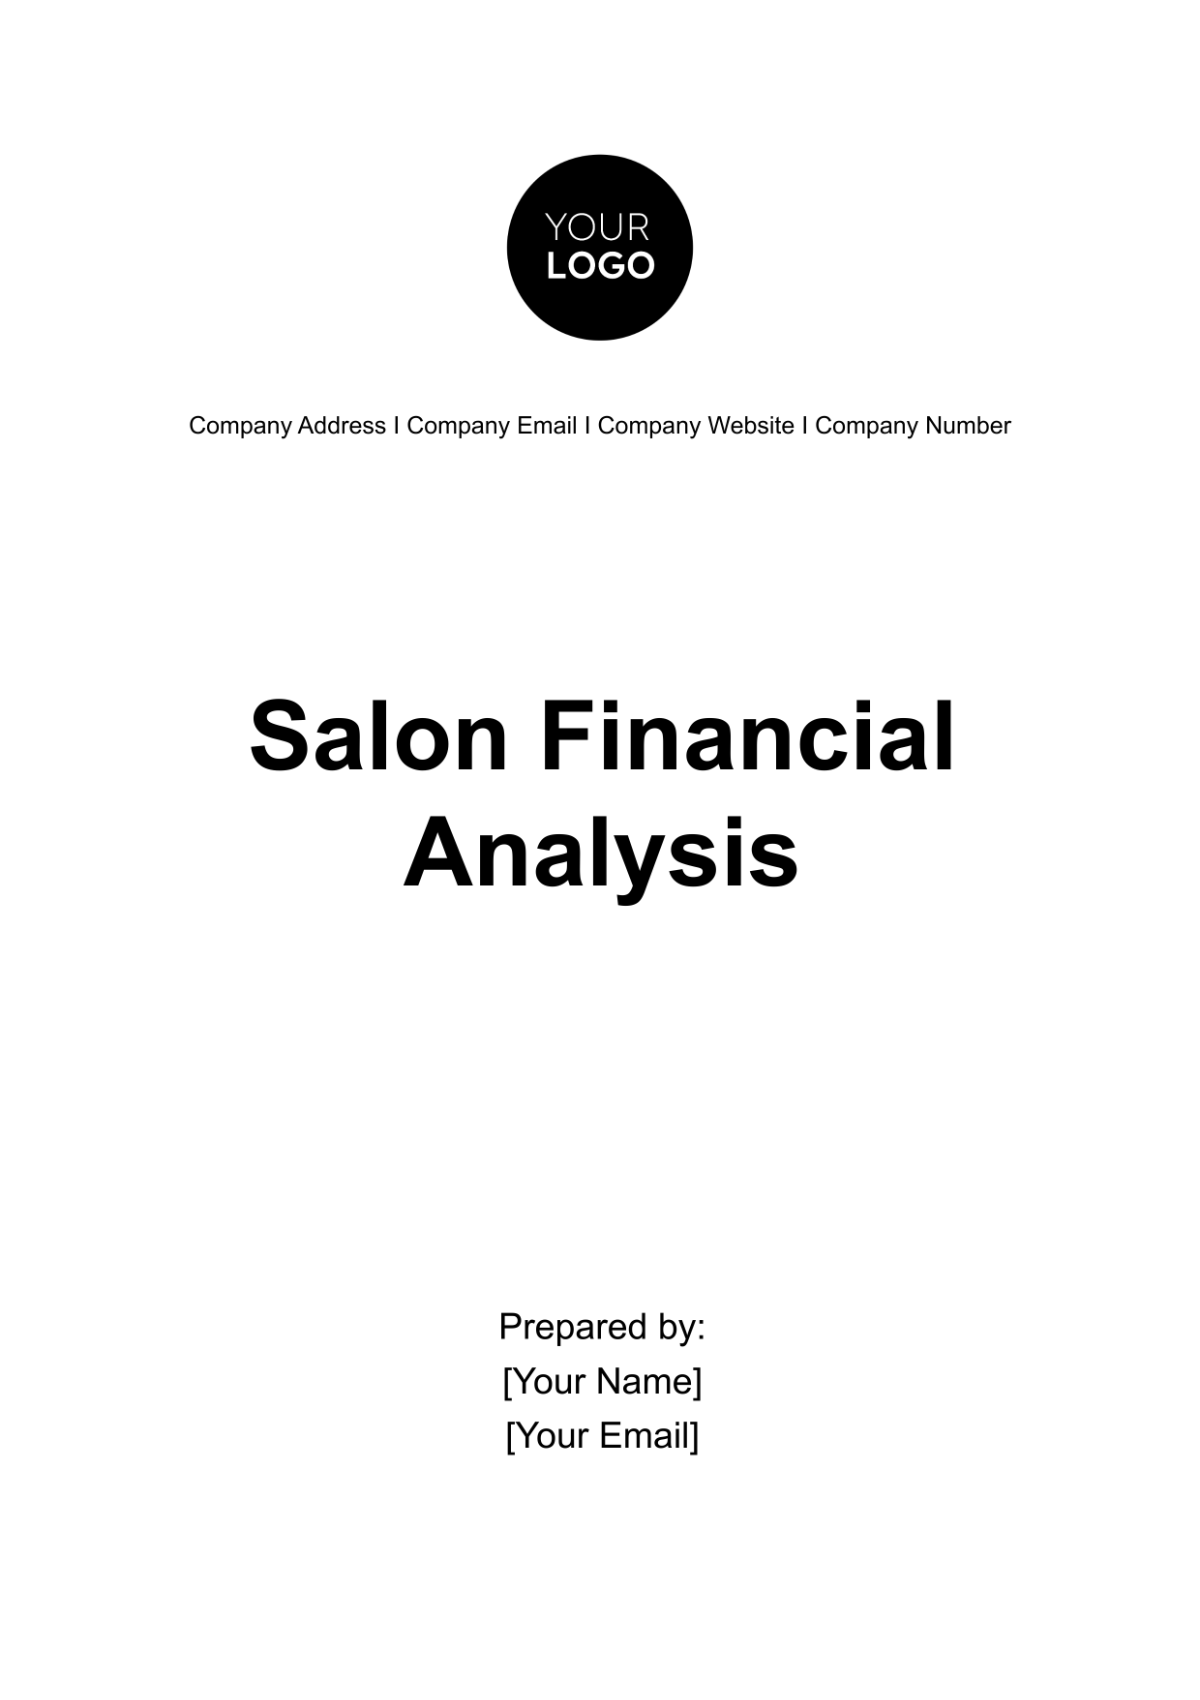 Salon Financial Analysis Template